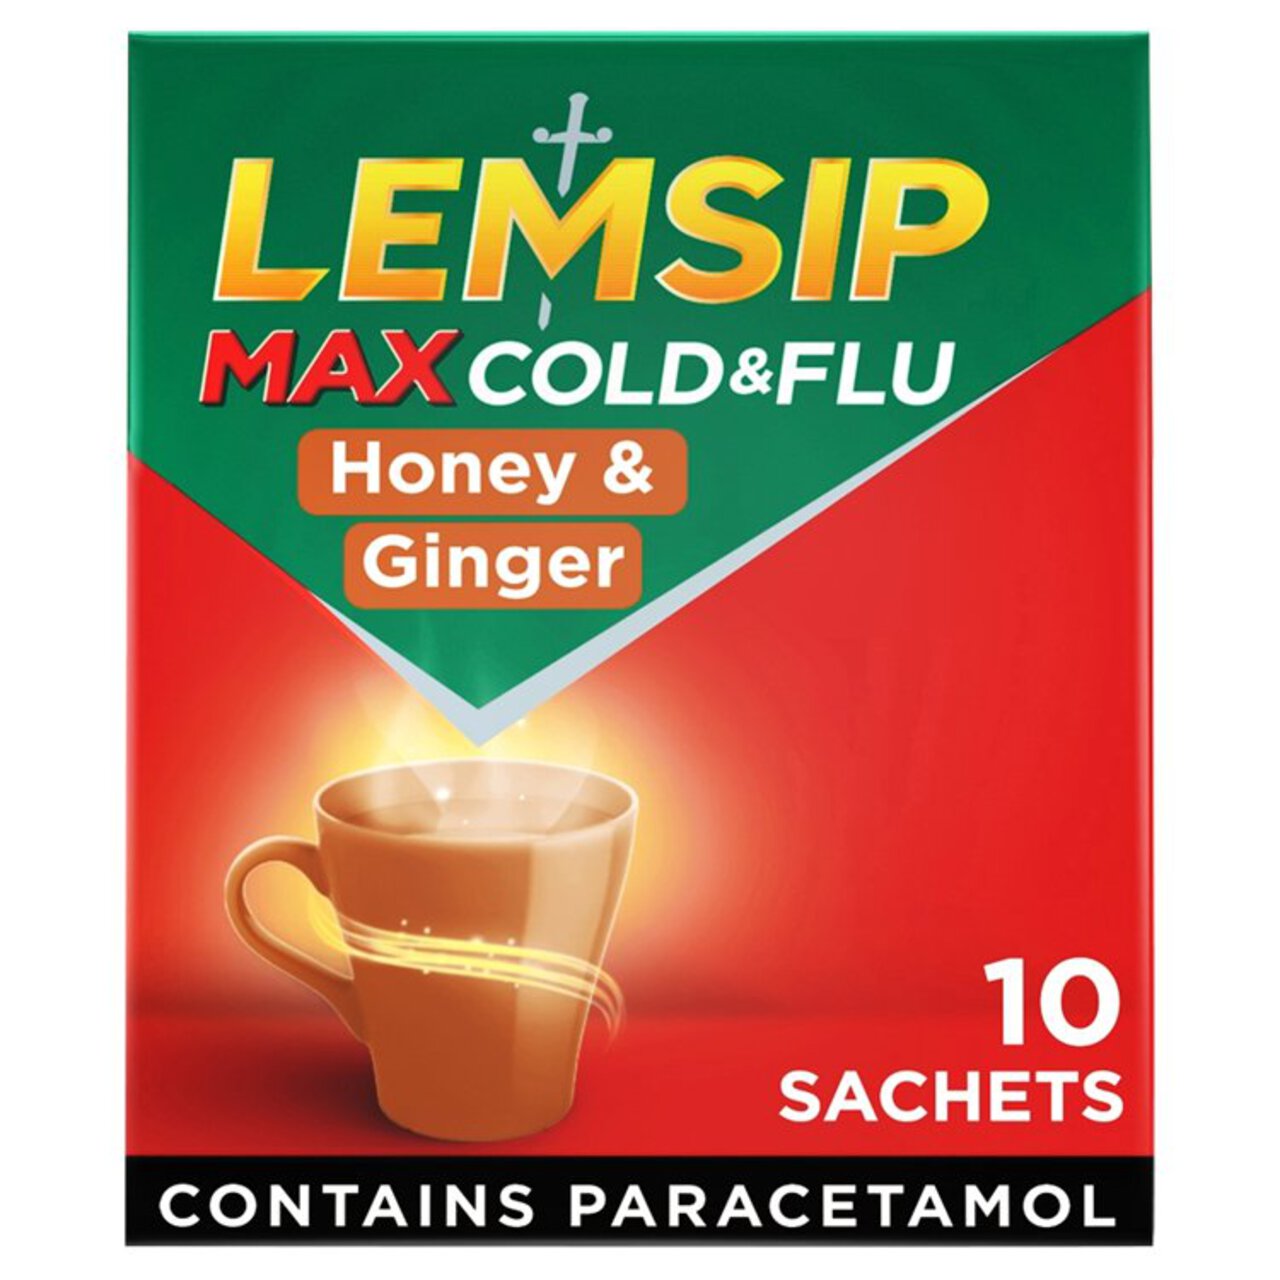 Lemsip Max Cold & Flu Honey & Ginger Sachets Paracetamol 10 per pack